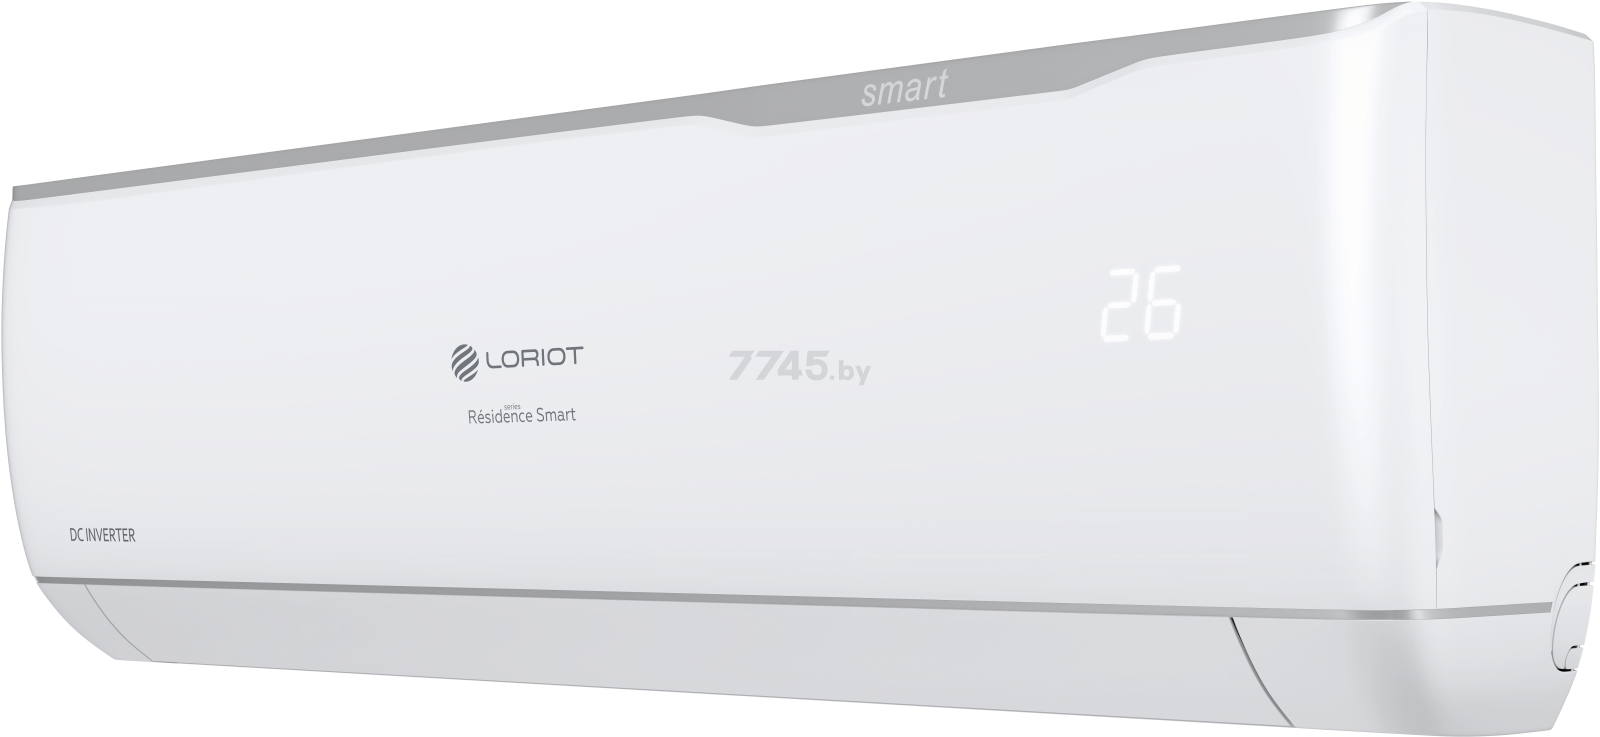 Сплит-система LORIOT Residence Smart DC Inverter LAC-24AJI